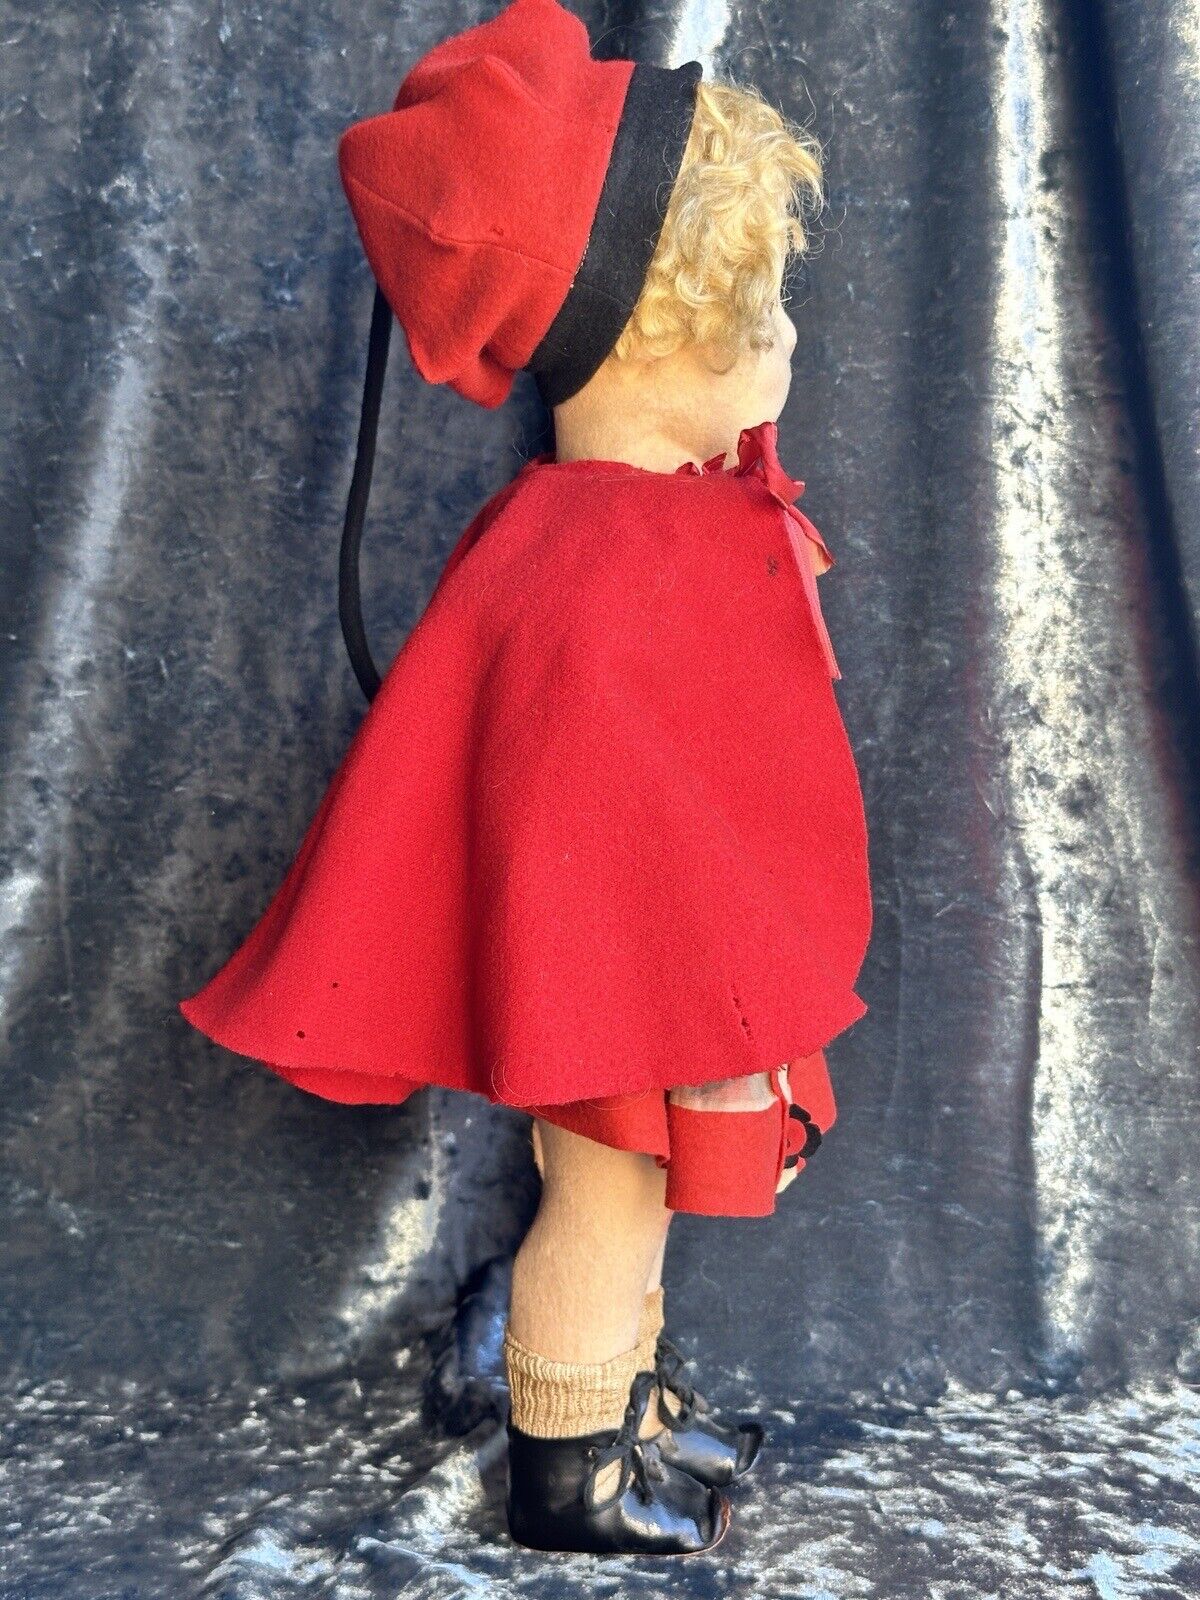 Early Vintage Italian Lenci 111 Series All Original 18” Doll with Metal Rivet